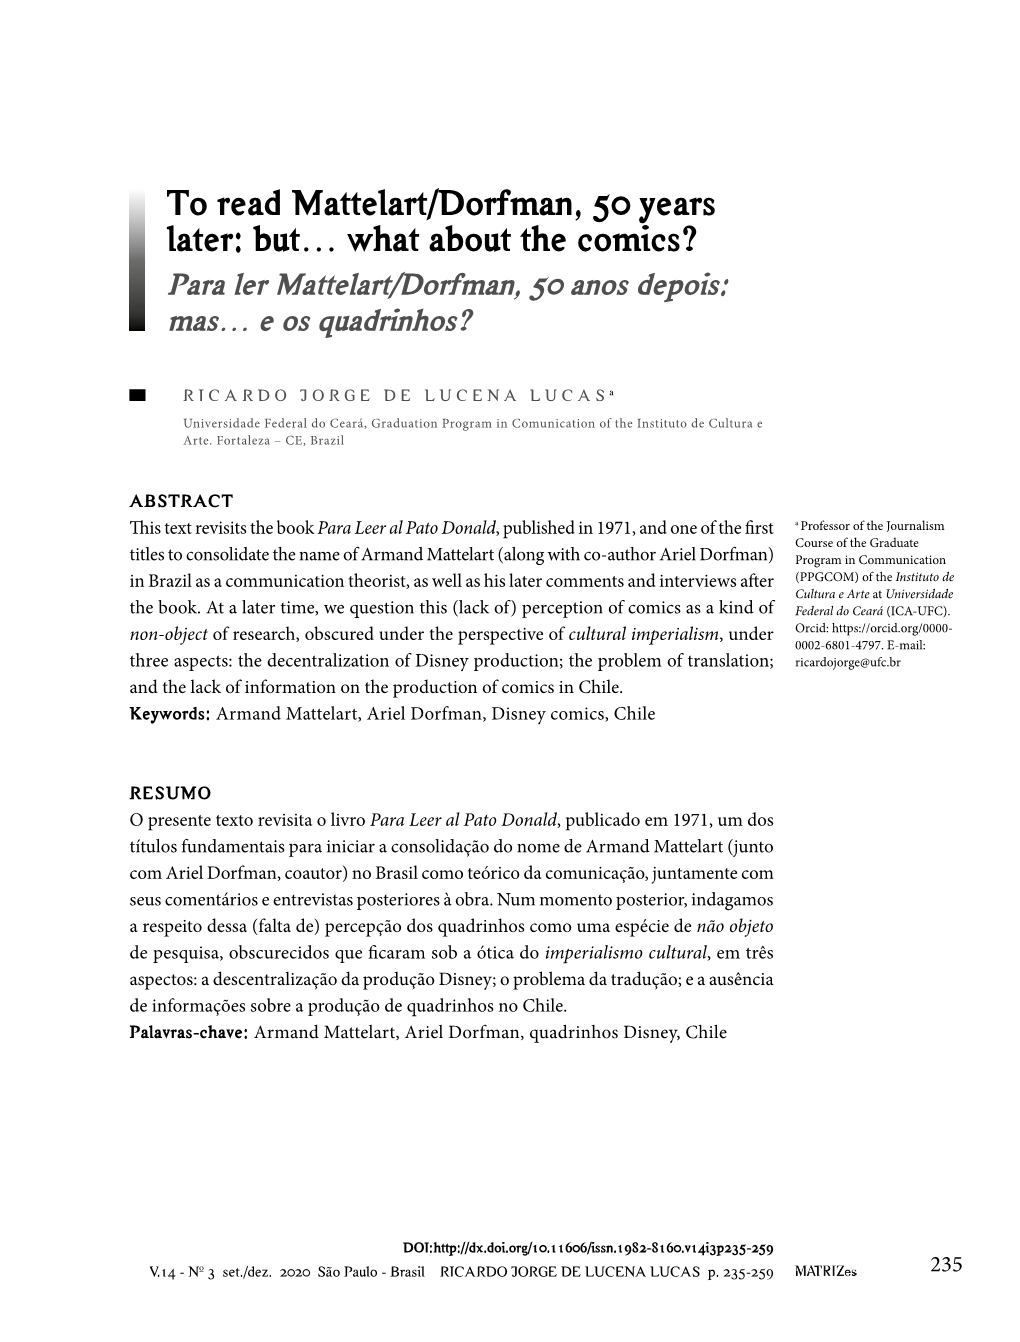 To Read Mattelart/Dorfman, 50 Years Later: But… What About the Comics? Para Ler Mattelart/Dorfman, 50 Anos Depois: Mas… E Os Quadrinhos?